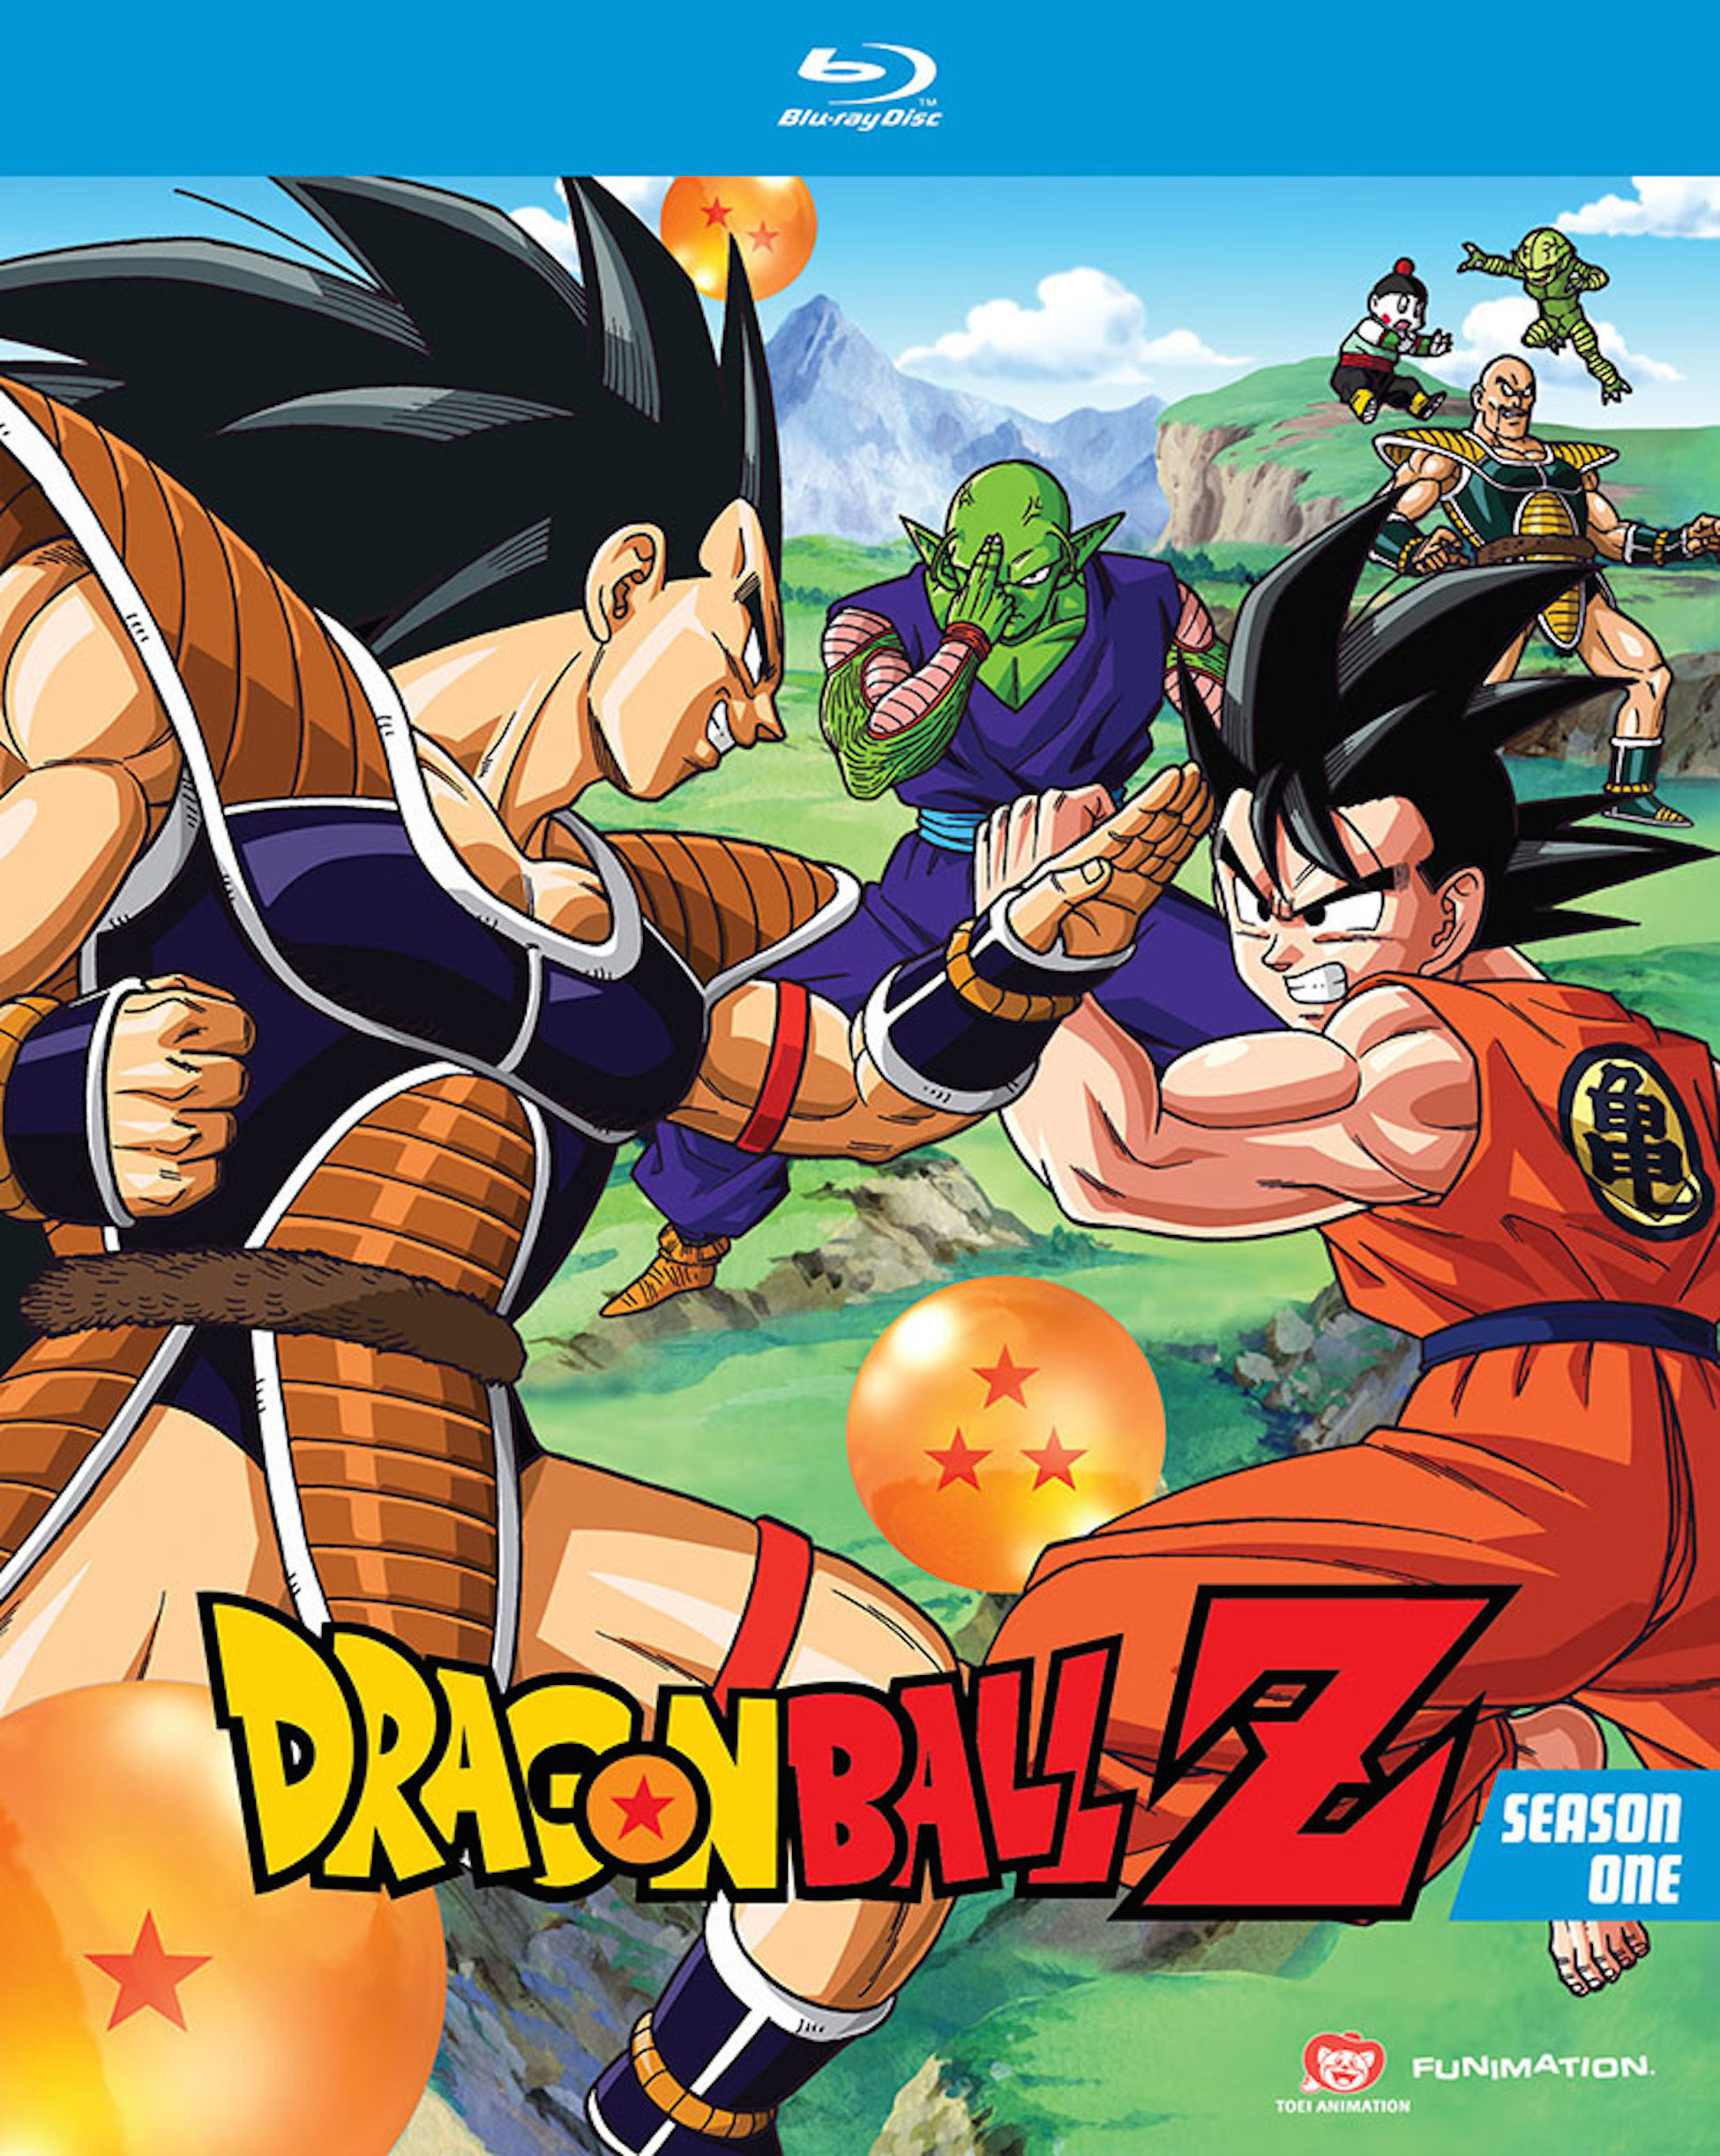 Anime Dragon Ball Z em Blu Ray 1080p